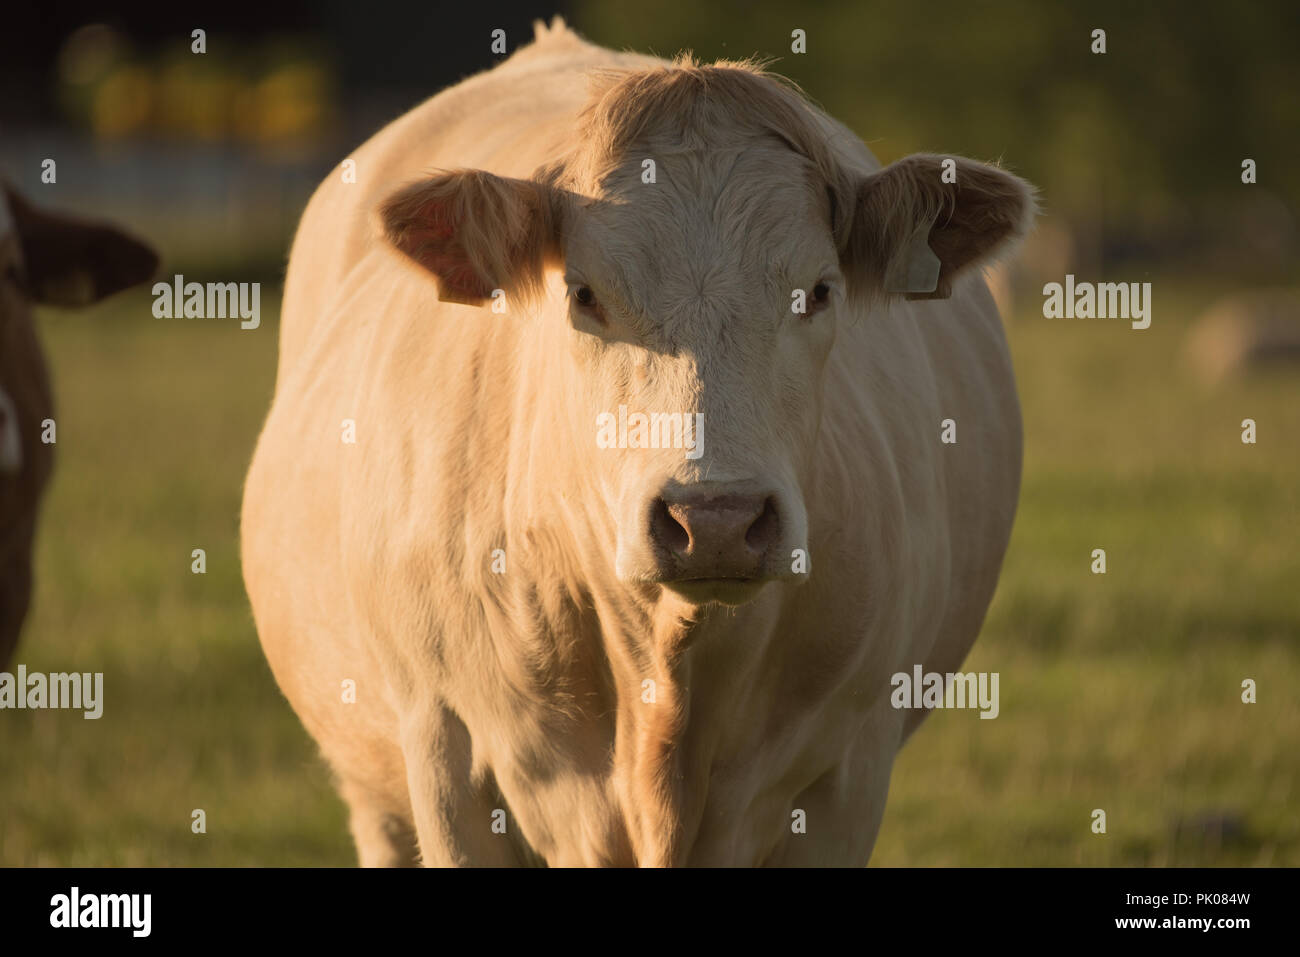 Charolais cow in field portrait view Stock Photo